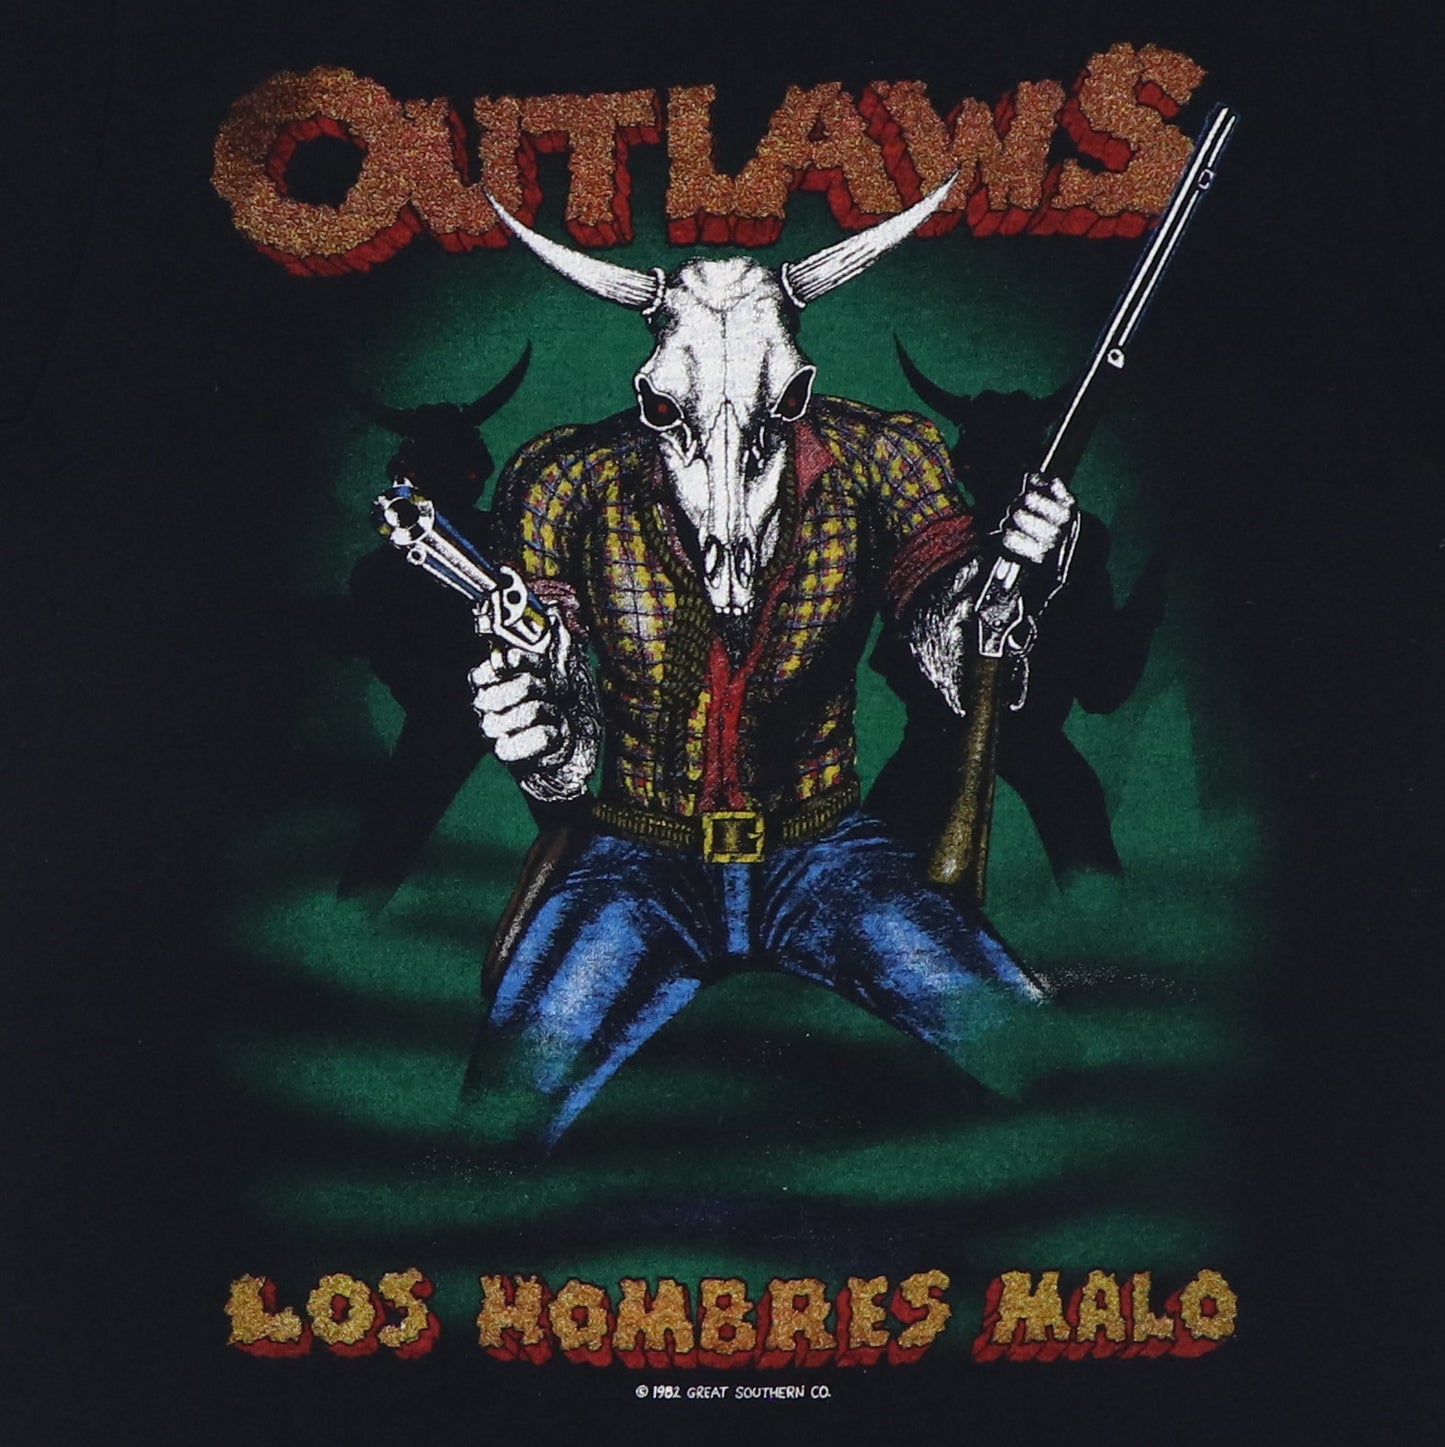 1982 The Outlaws Badman Tour Shirt